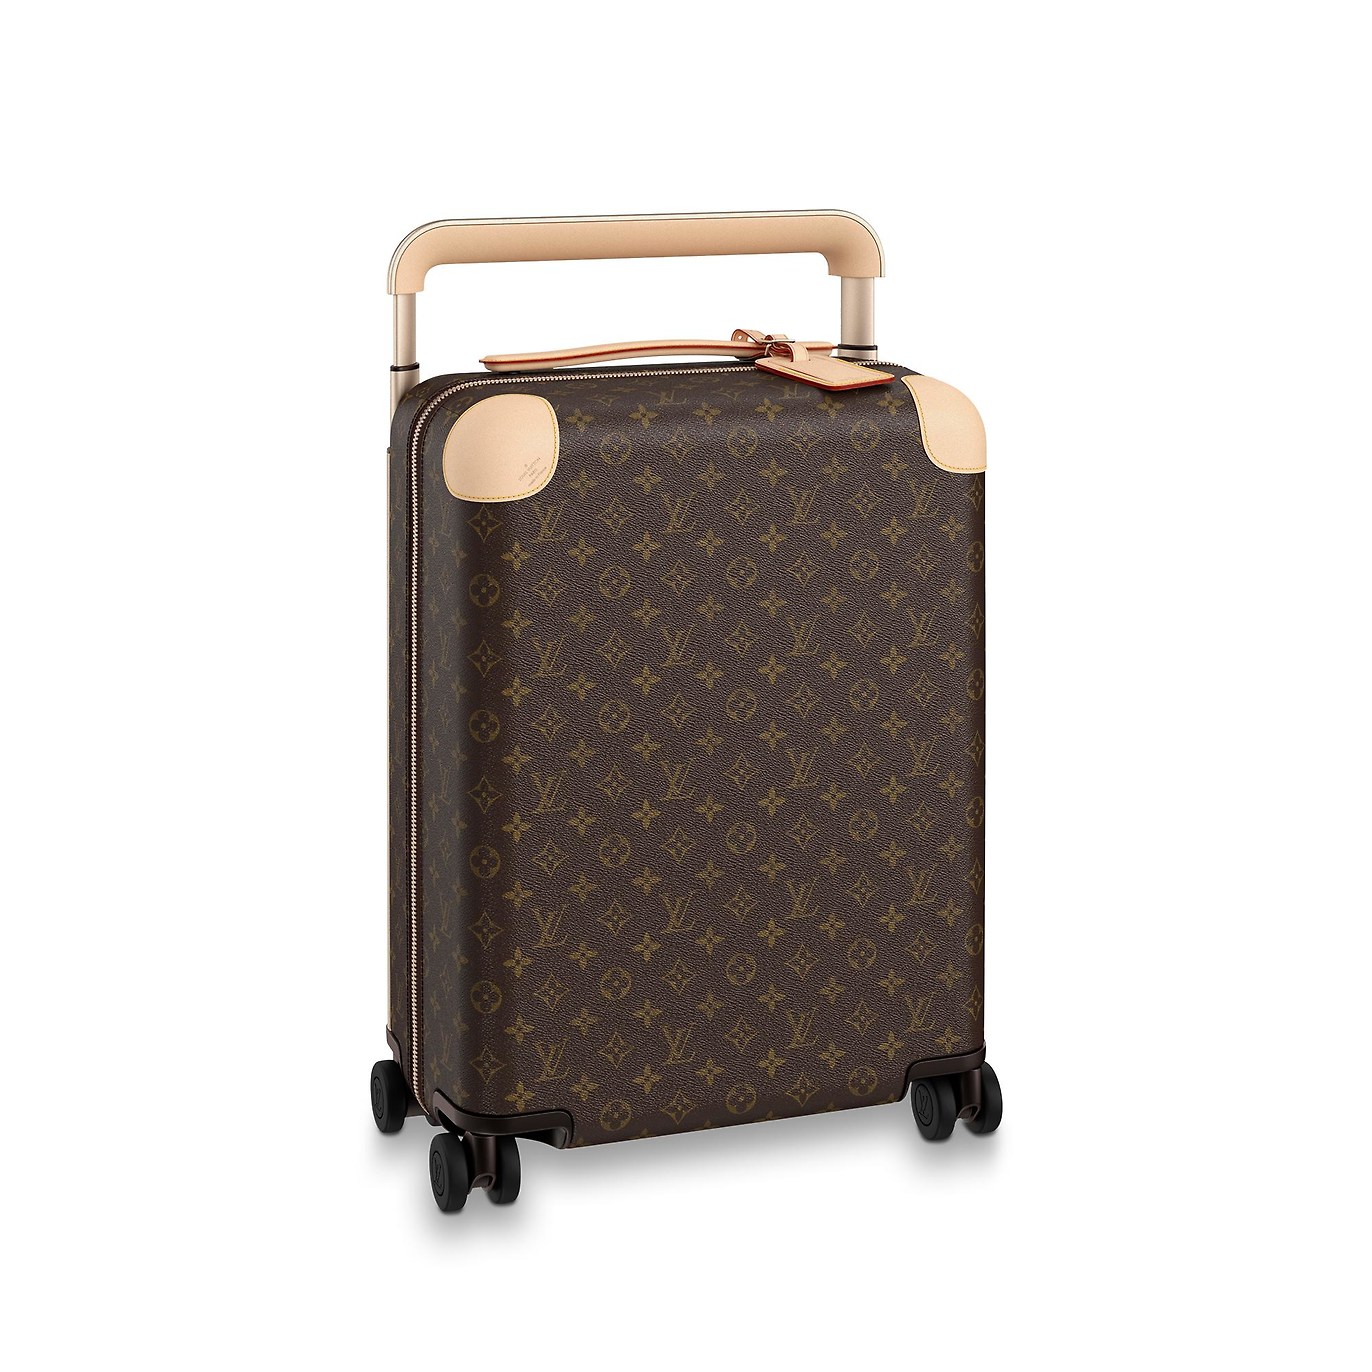 Buy Quality designer luggage sets For International Travel 